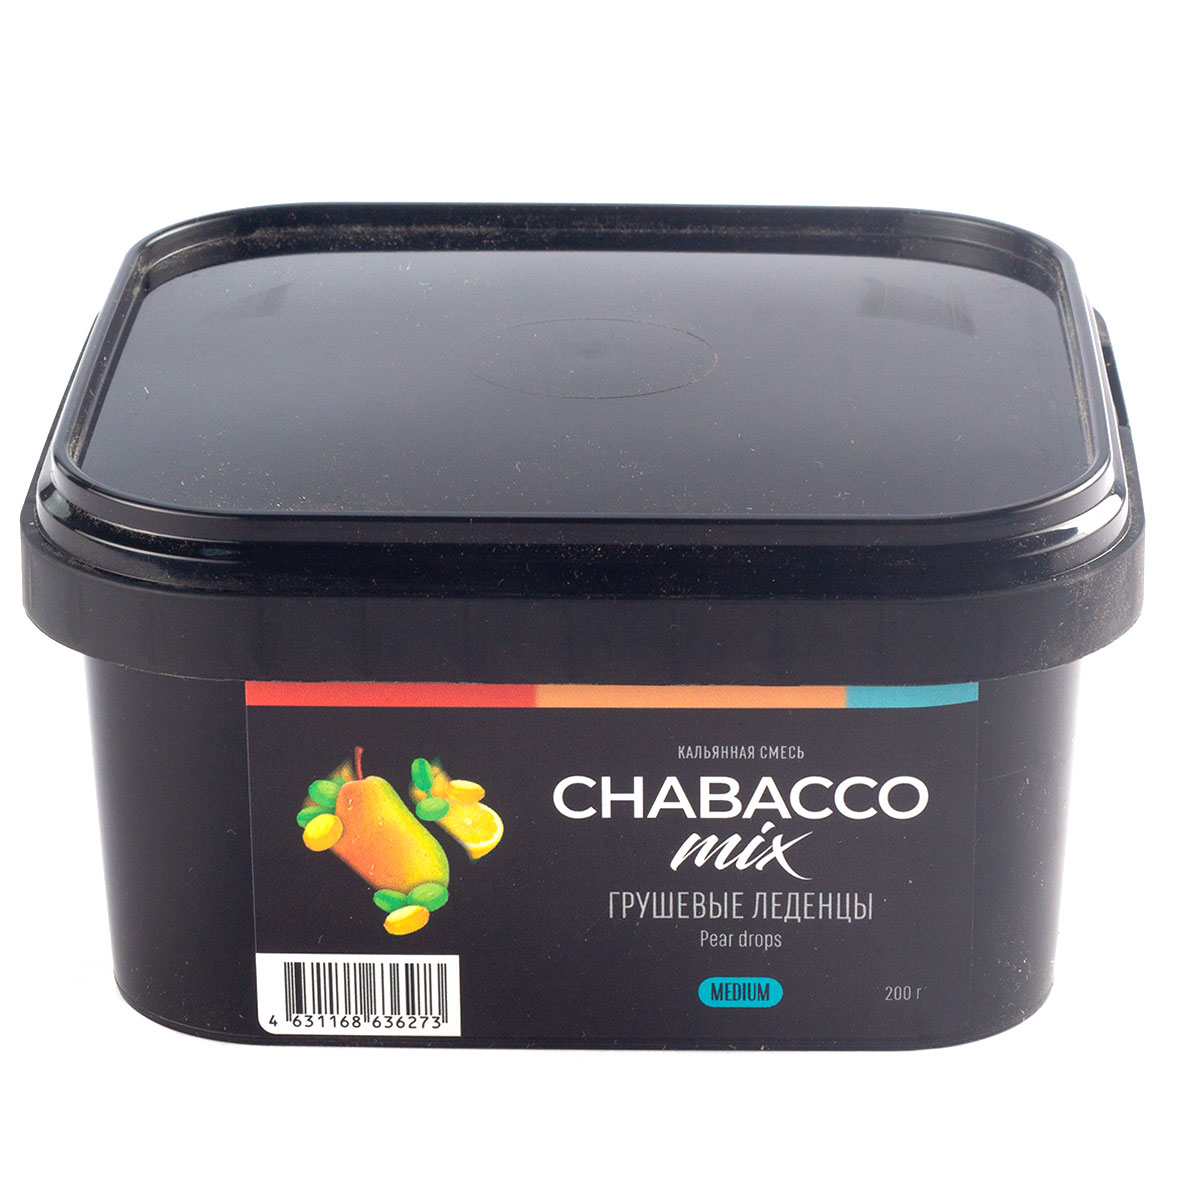 Chabacco - MIX - PEAR DROPS (Грушевые леденцы) - 200 g